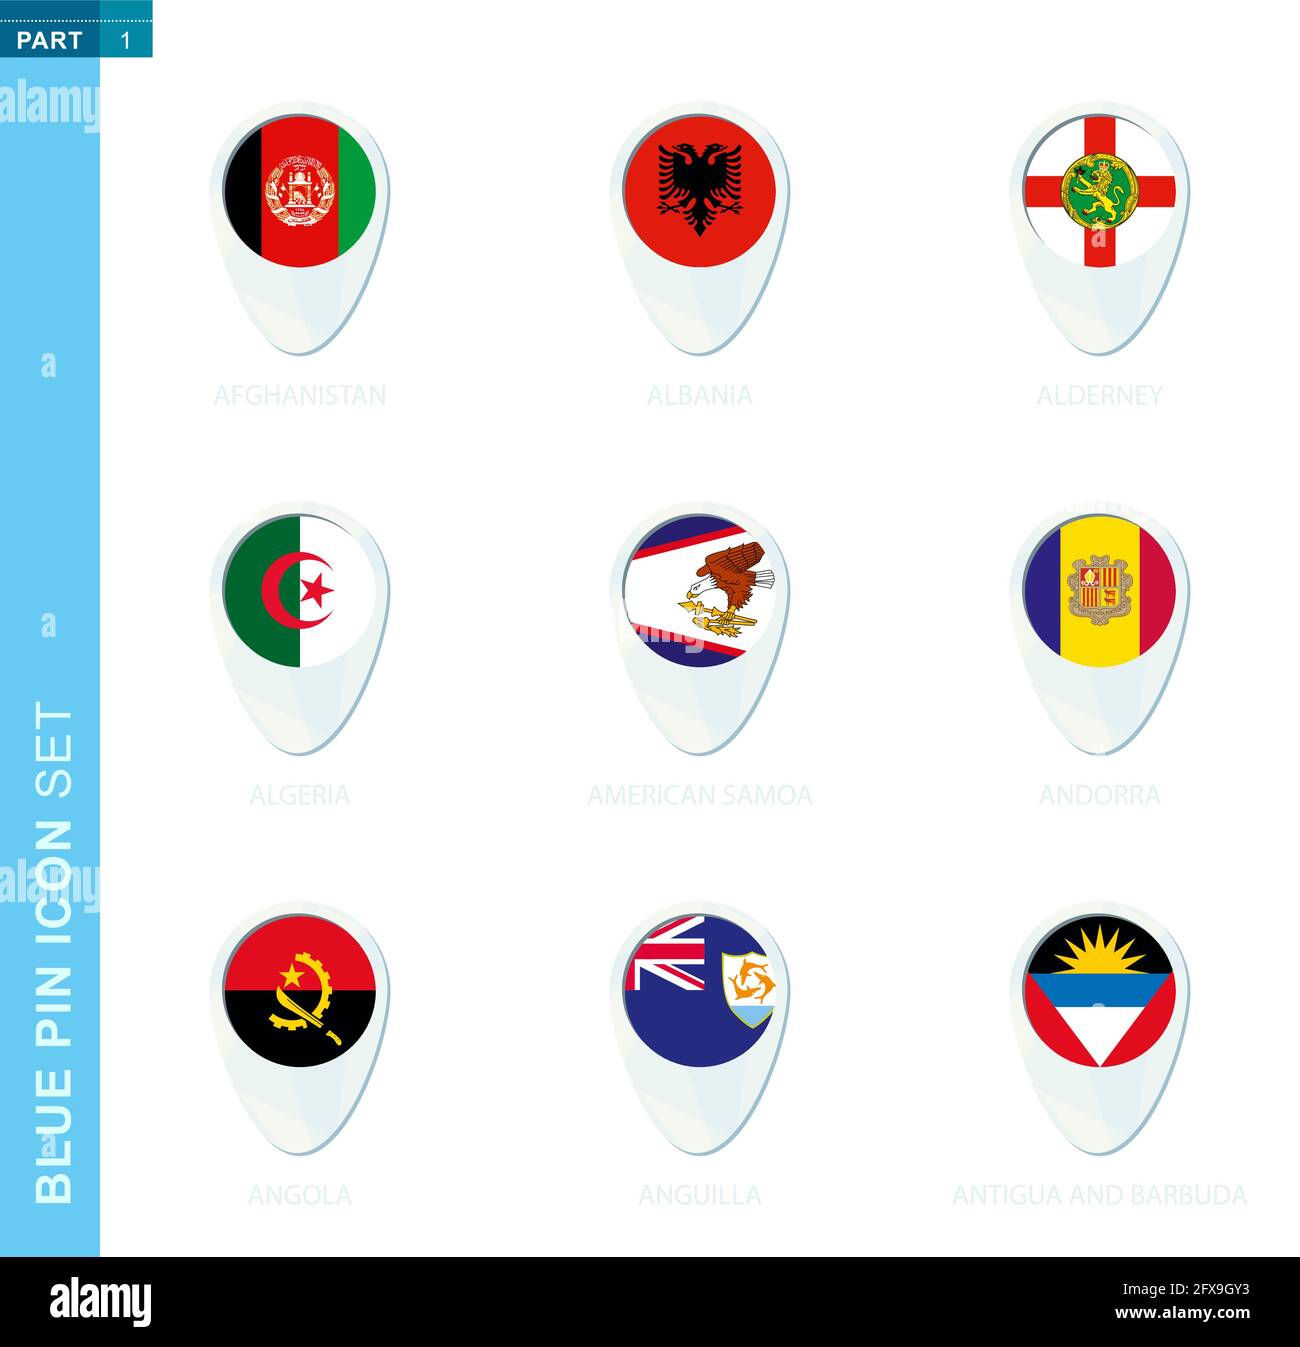 Pin flag set, map location icon in blue colors with flag of Afghanistan, Albania, Alderney, Algeria, American Samoa, Andorra, Angola, Anguilla, Antigu Stock Vector